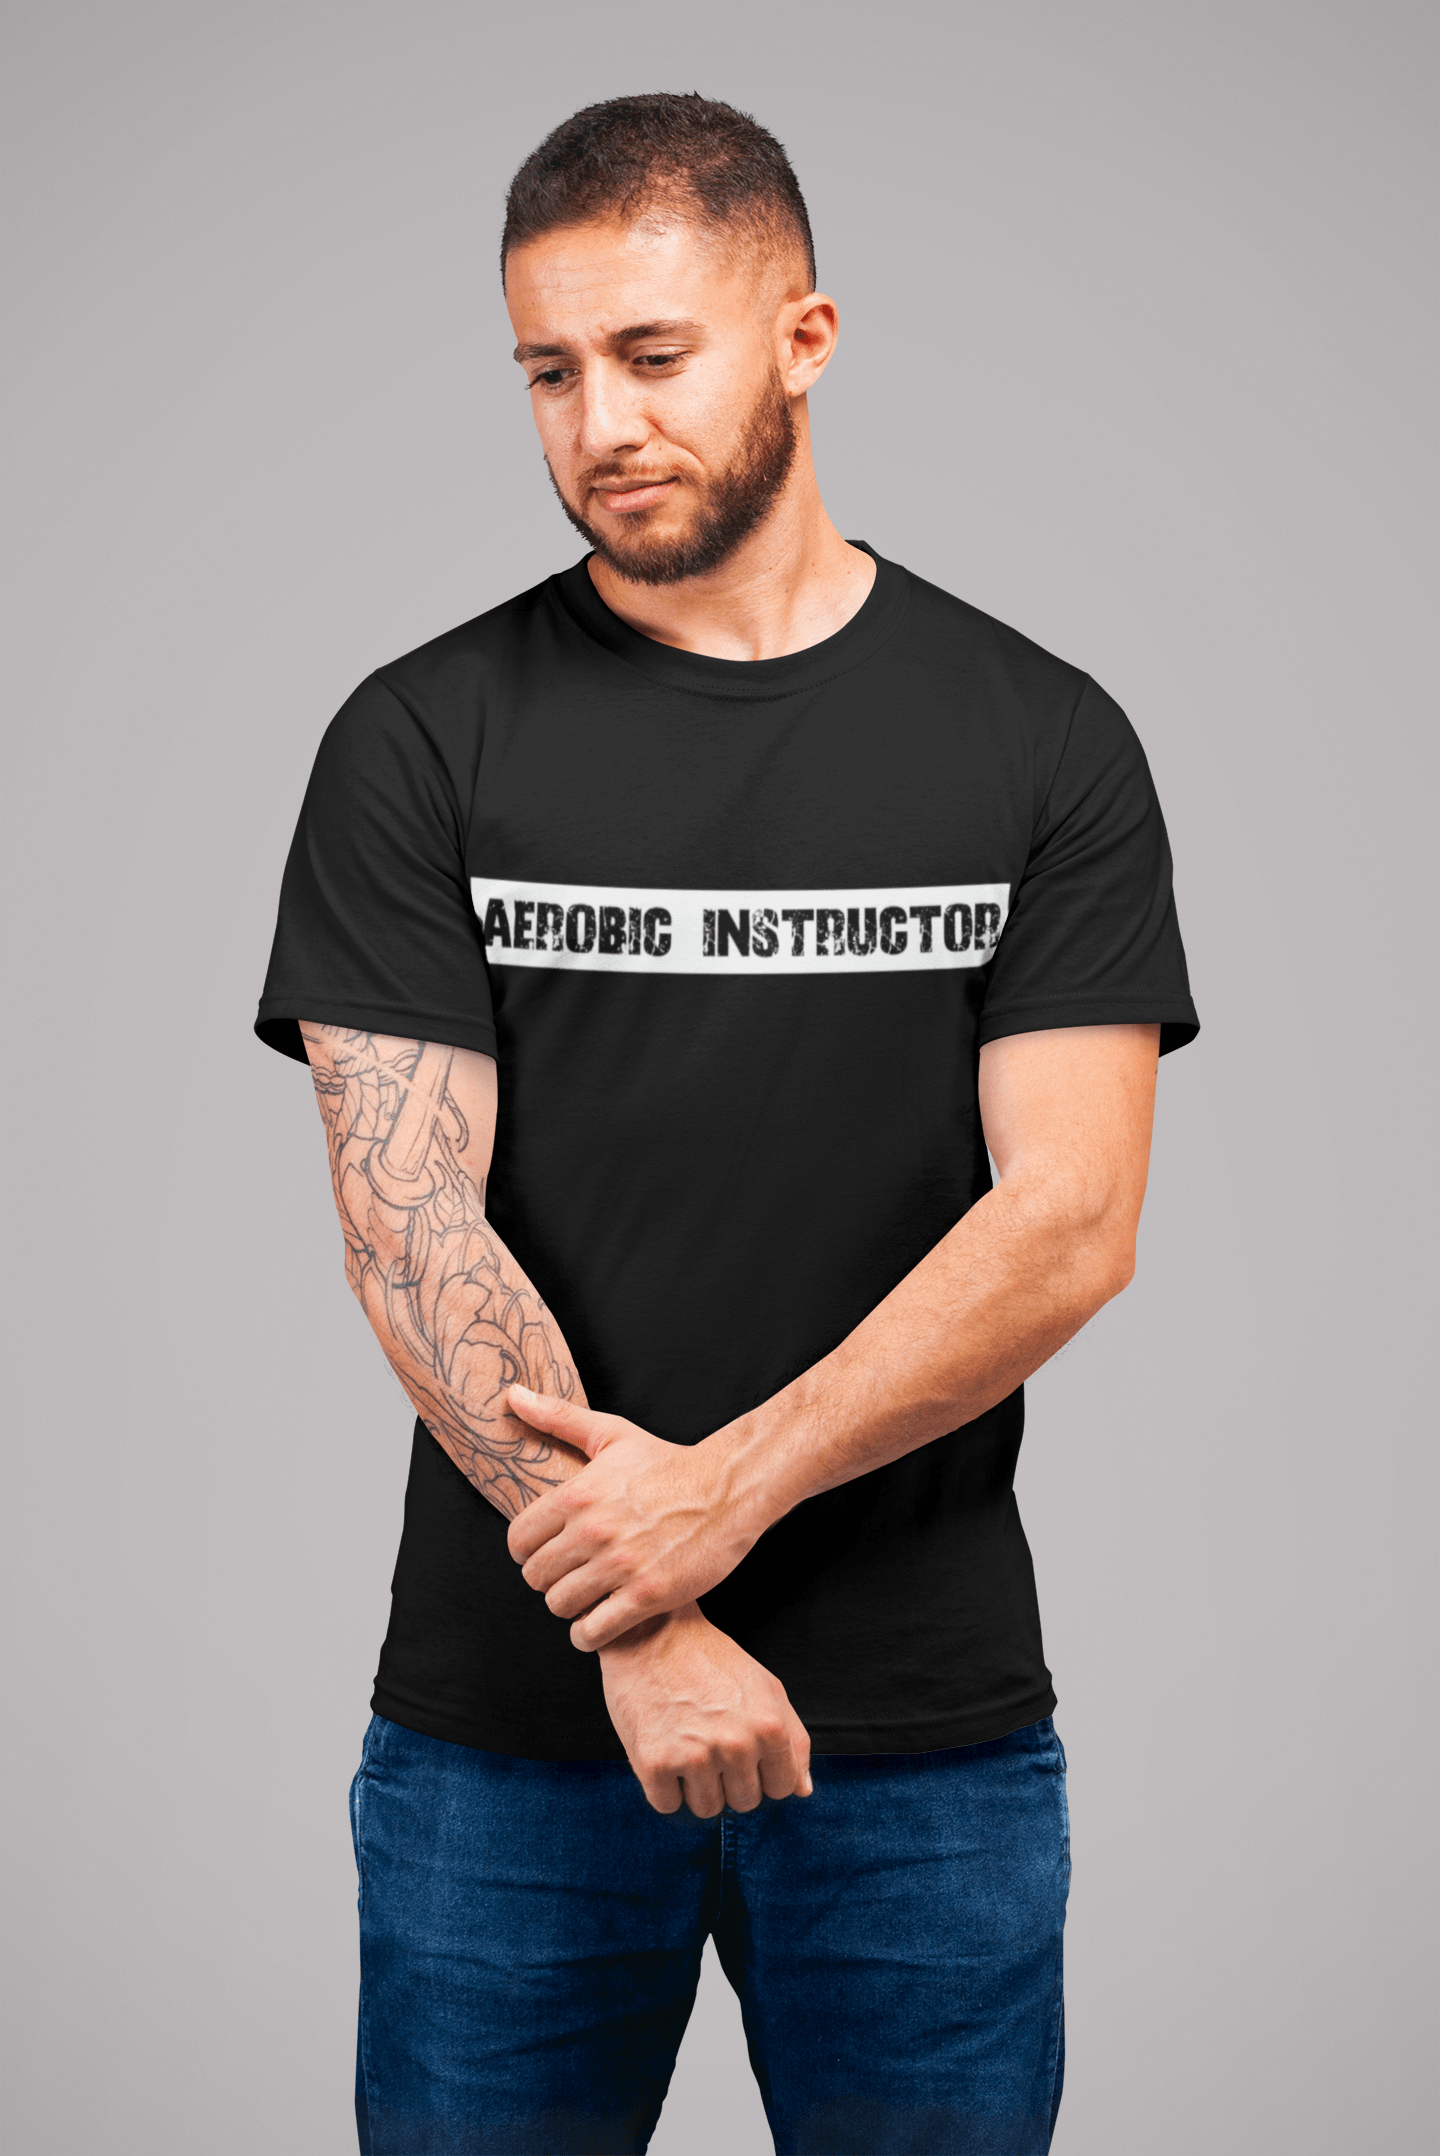 Aerobic Instructor t shirt, mens t-shirt, occupation, S Size, Black, Cotton Round Neck